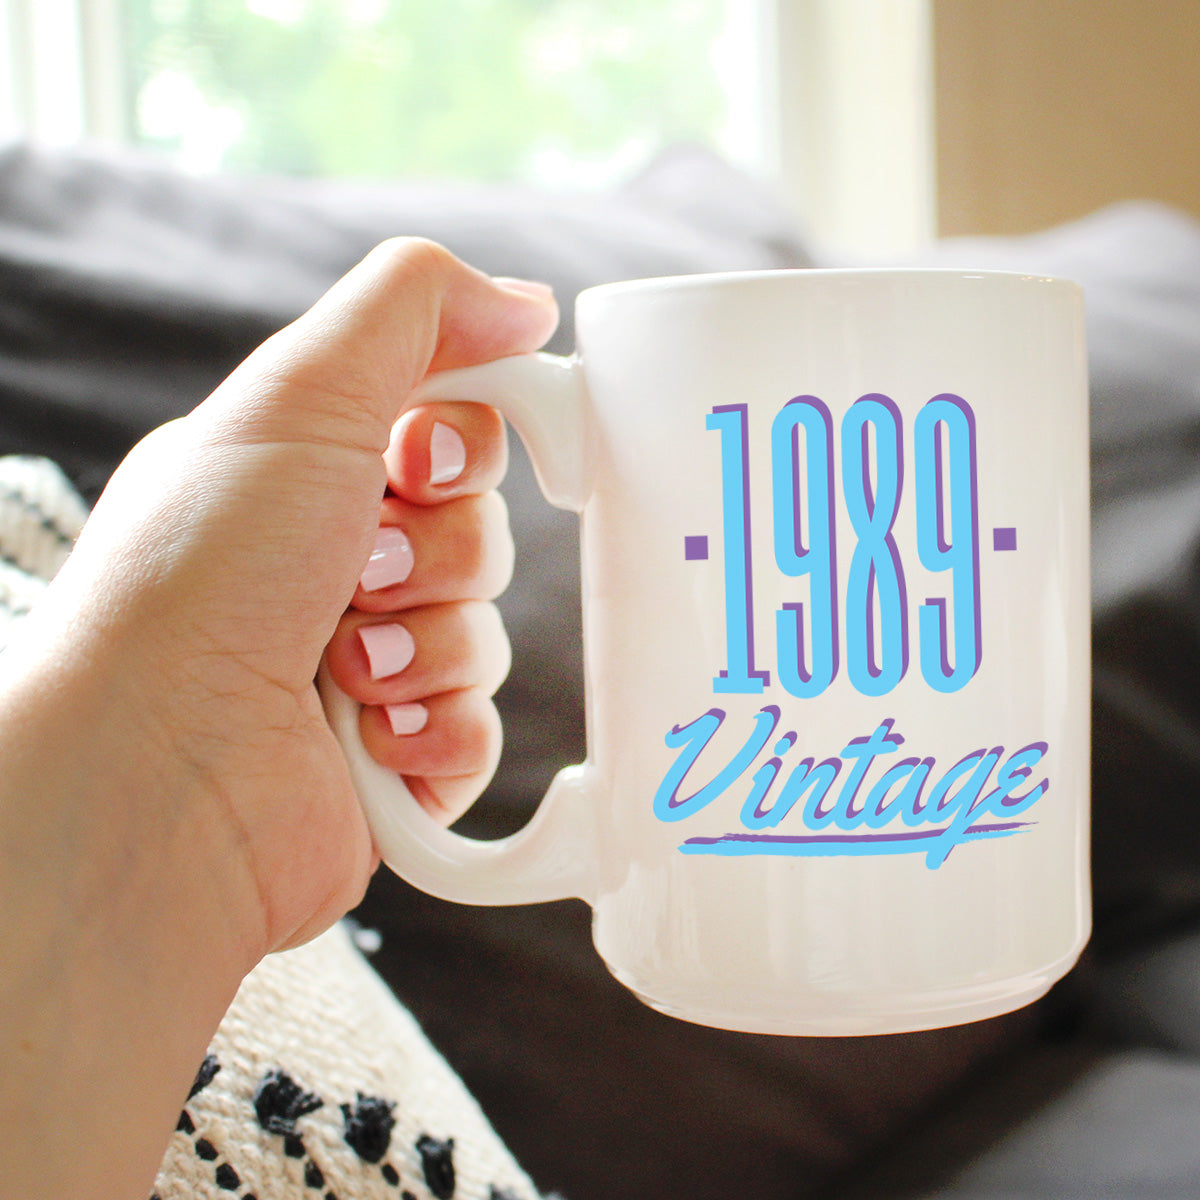 Vintage 1989 - Fun 35th Birthday Coffee Mug Gifts for Men &amp; Women Turning 35 - Retro Coffee Cups